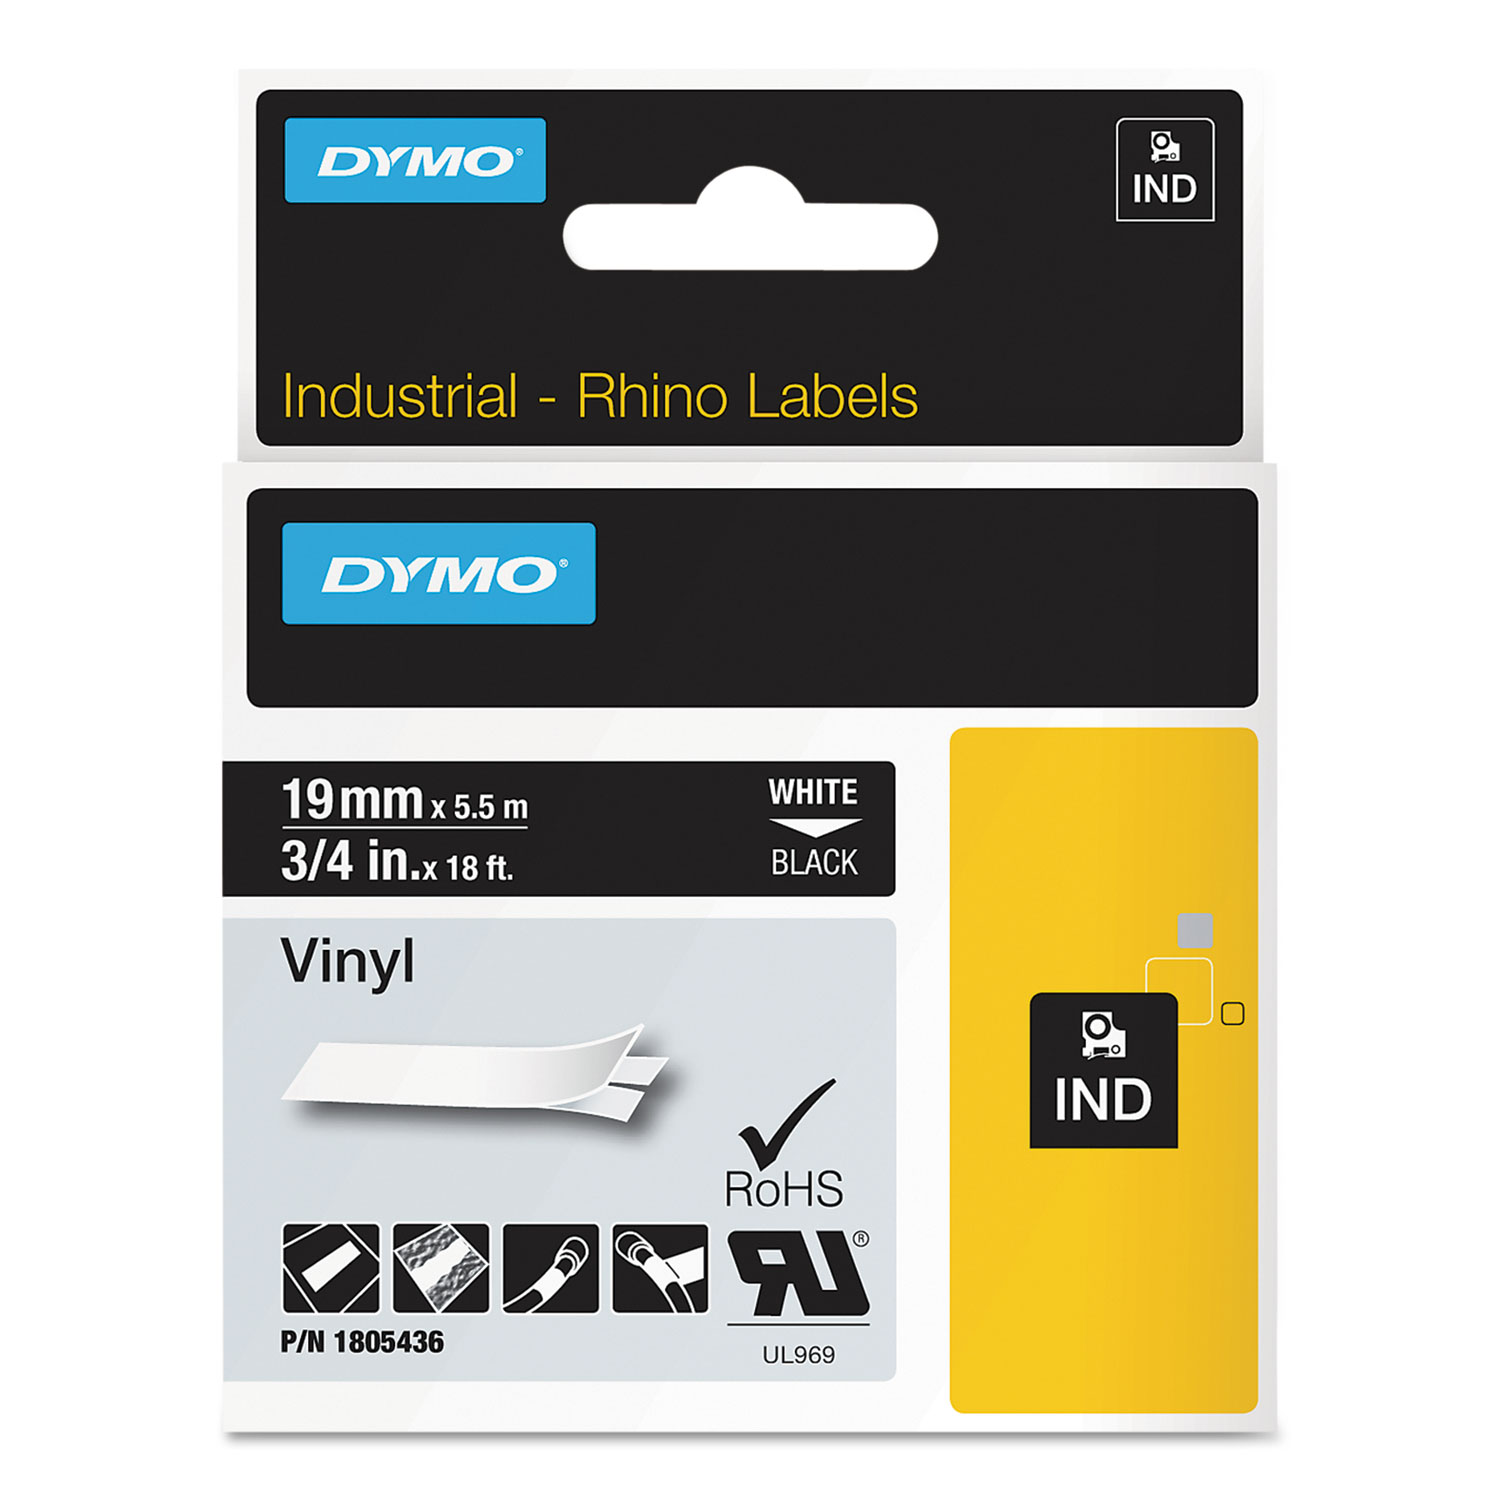  DYMO 1805436 Rhino Permanent Vinyl Industrial Label Tape, 0.75 x 18 ft, Black/White Print (DYM1805436) 